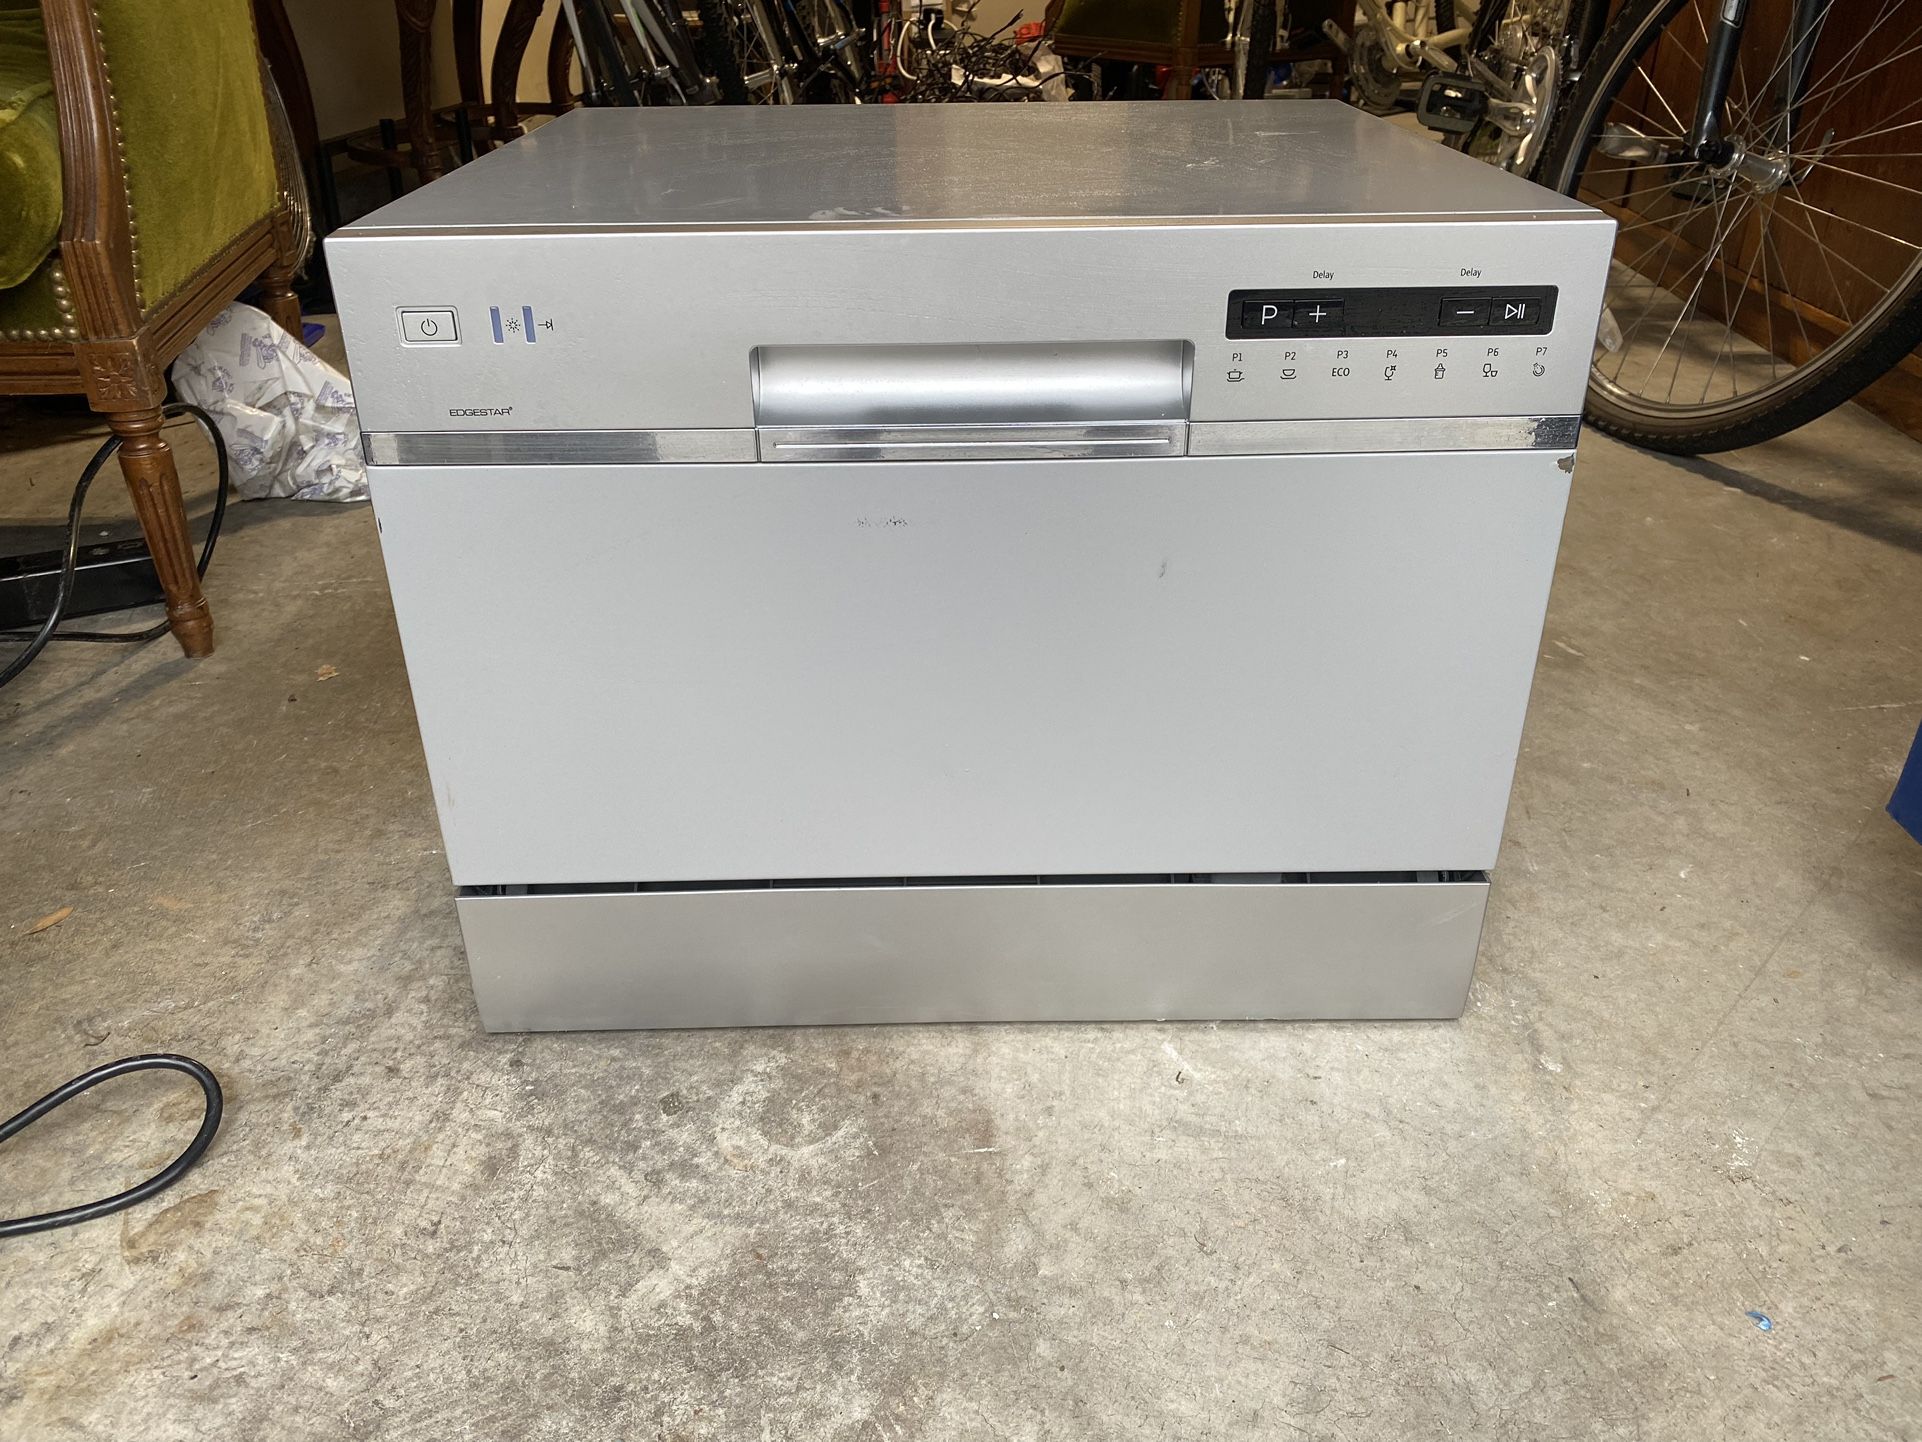 EdgeStar DWP62WH 6 Place Setting Portable Countertop Dishwasher -silver